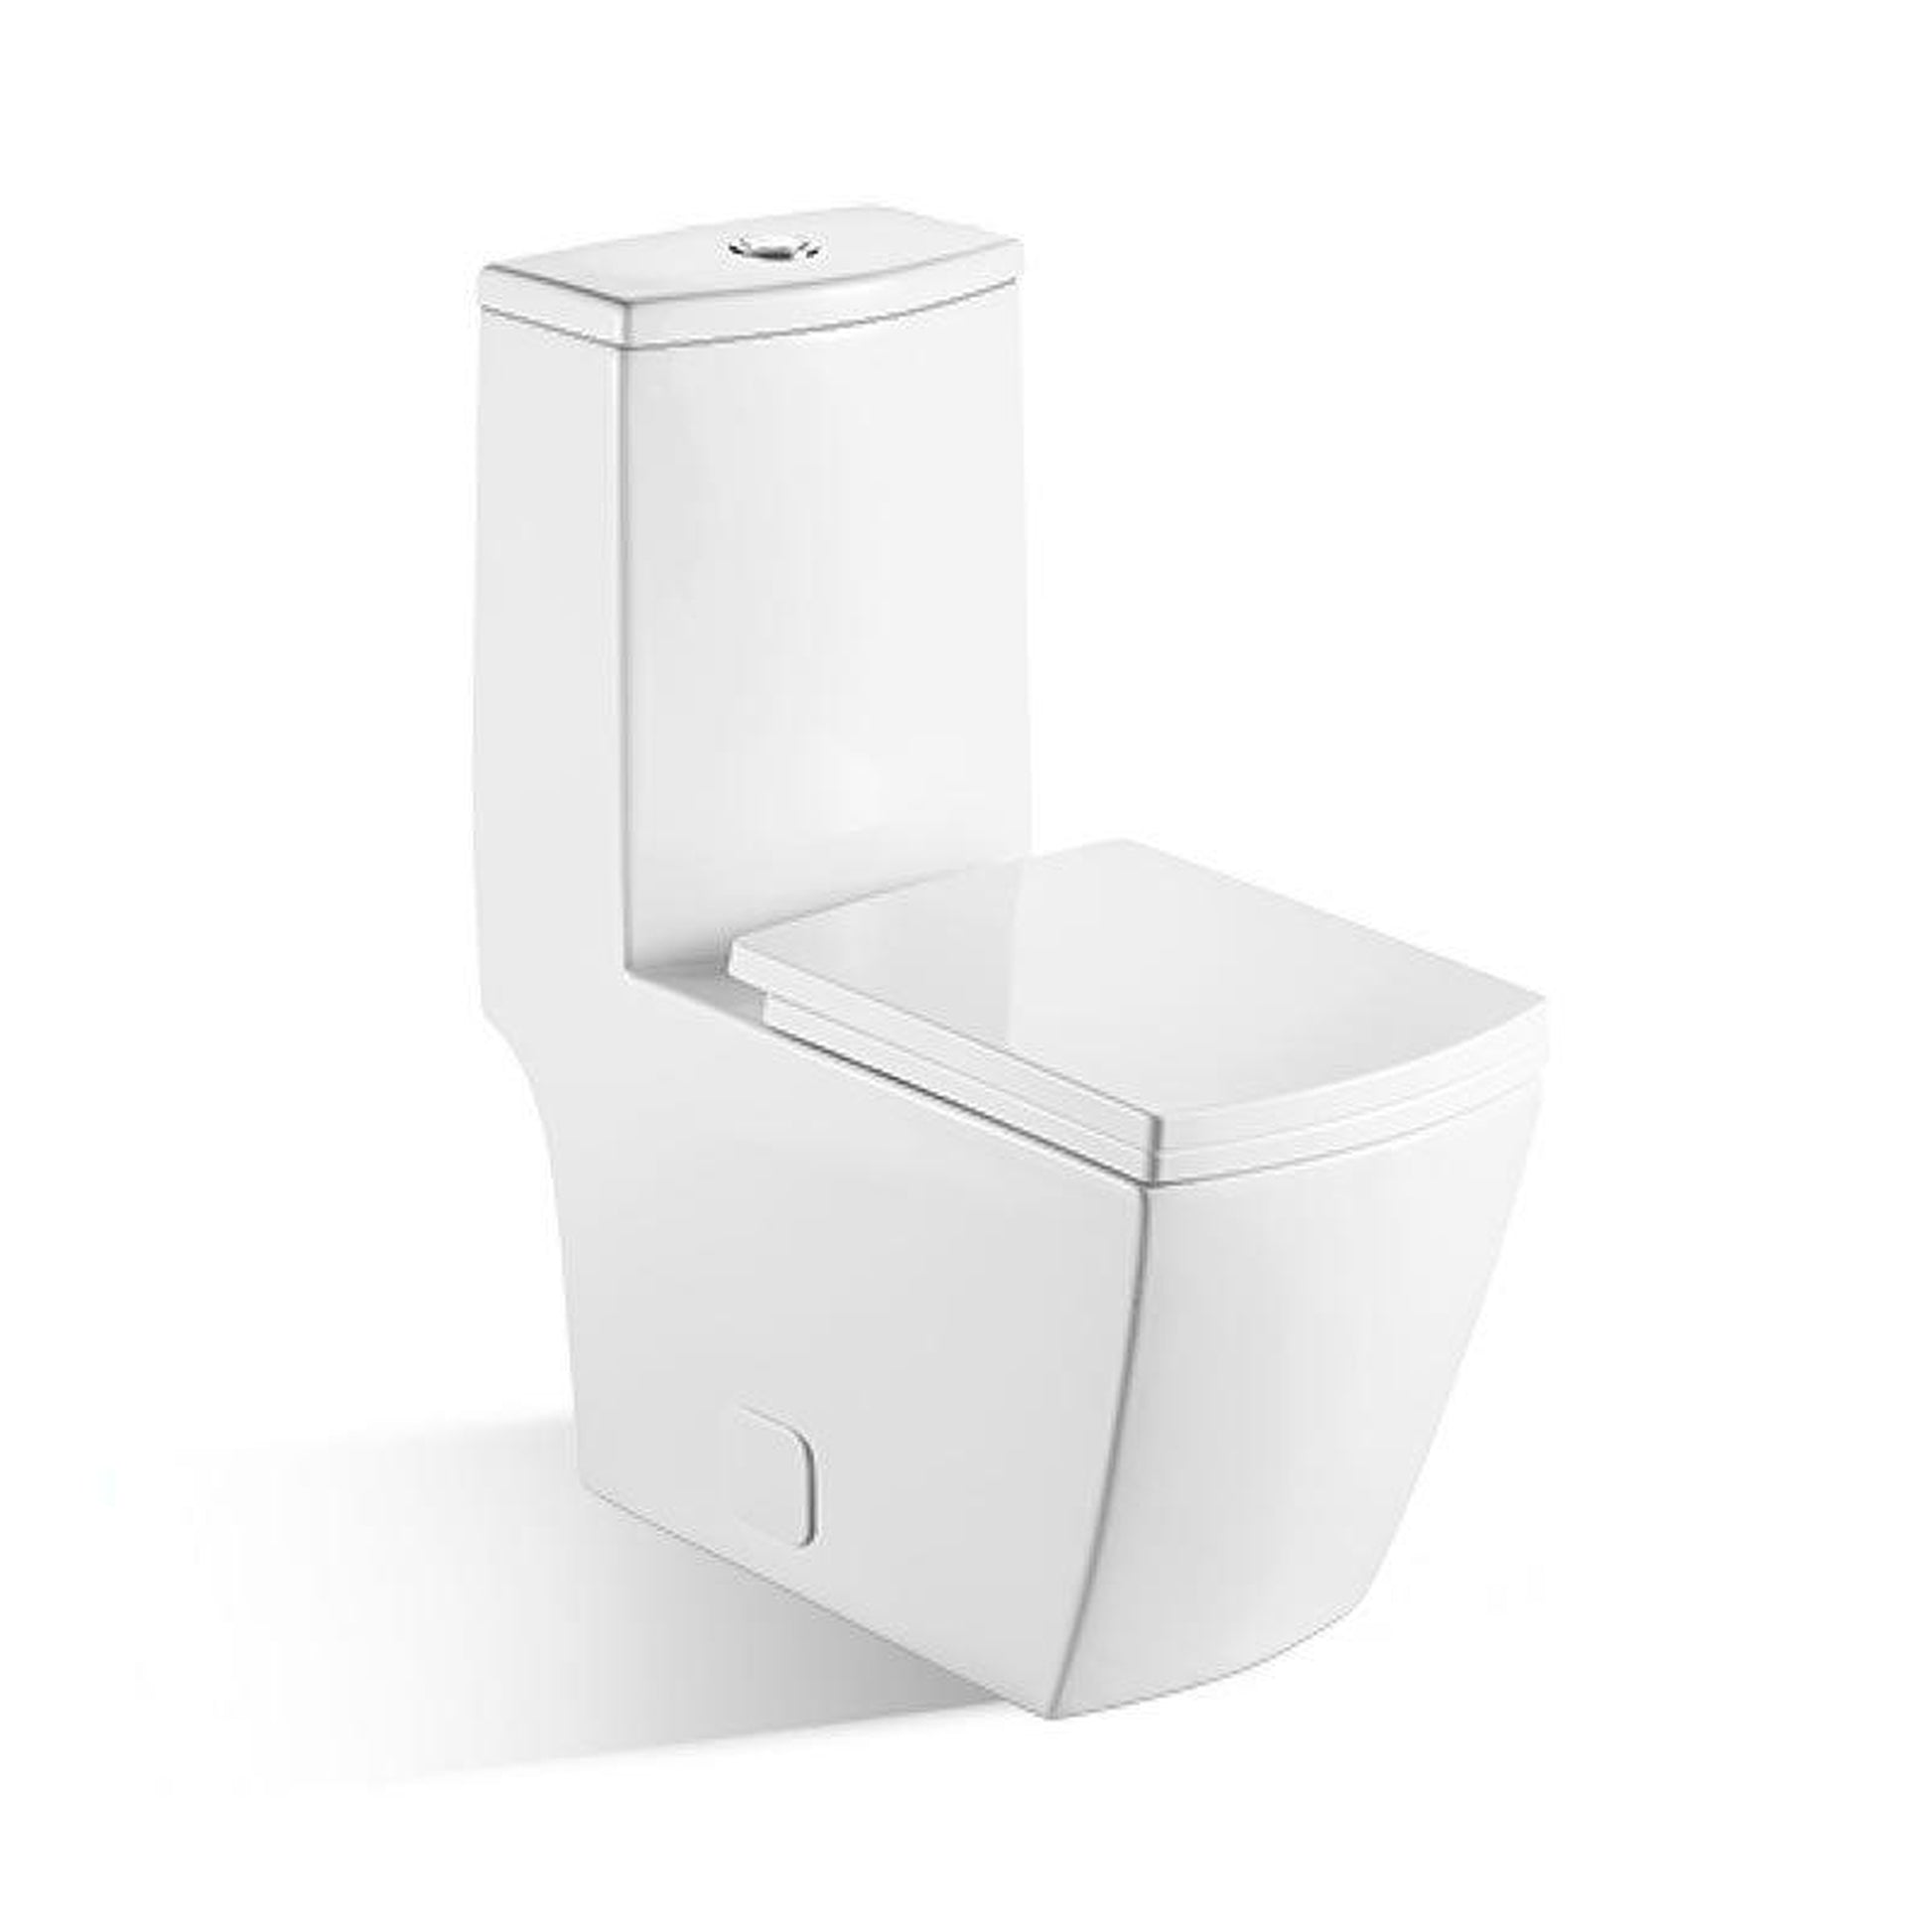 BNK BTO BL-036 Siphon Flushing Toilet